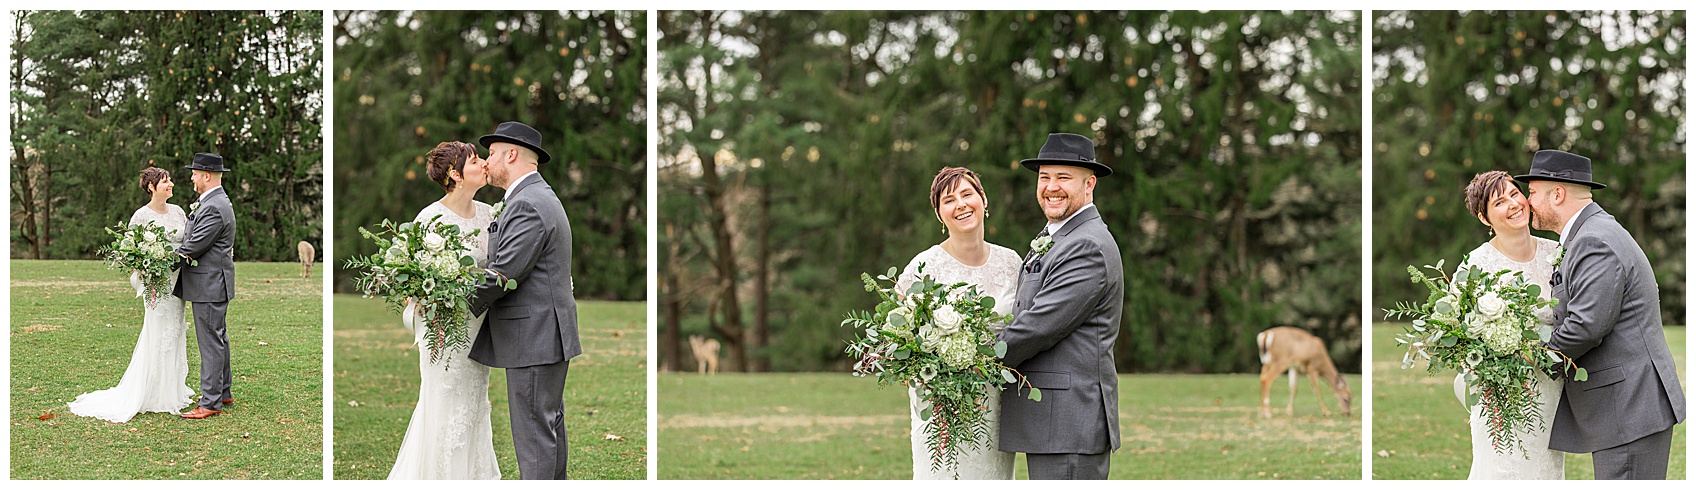 Bride and Groom Wedding Photos in Field by Oglebay